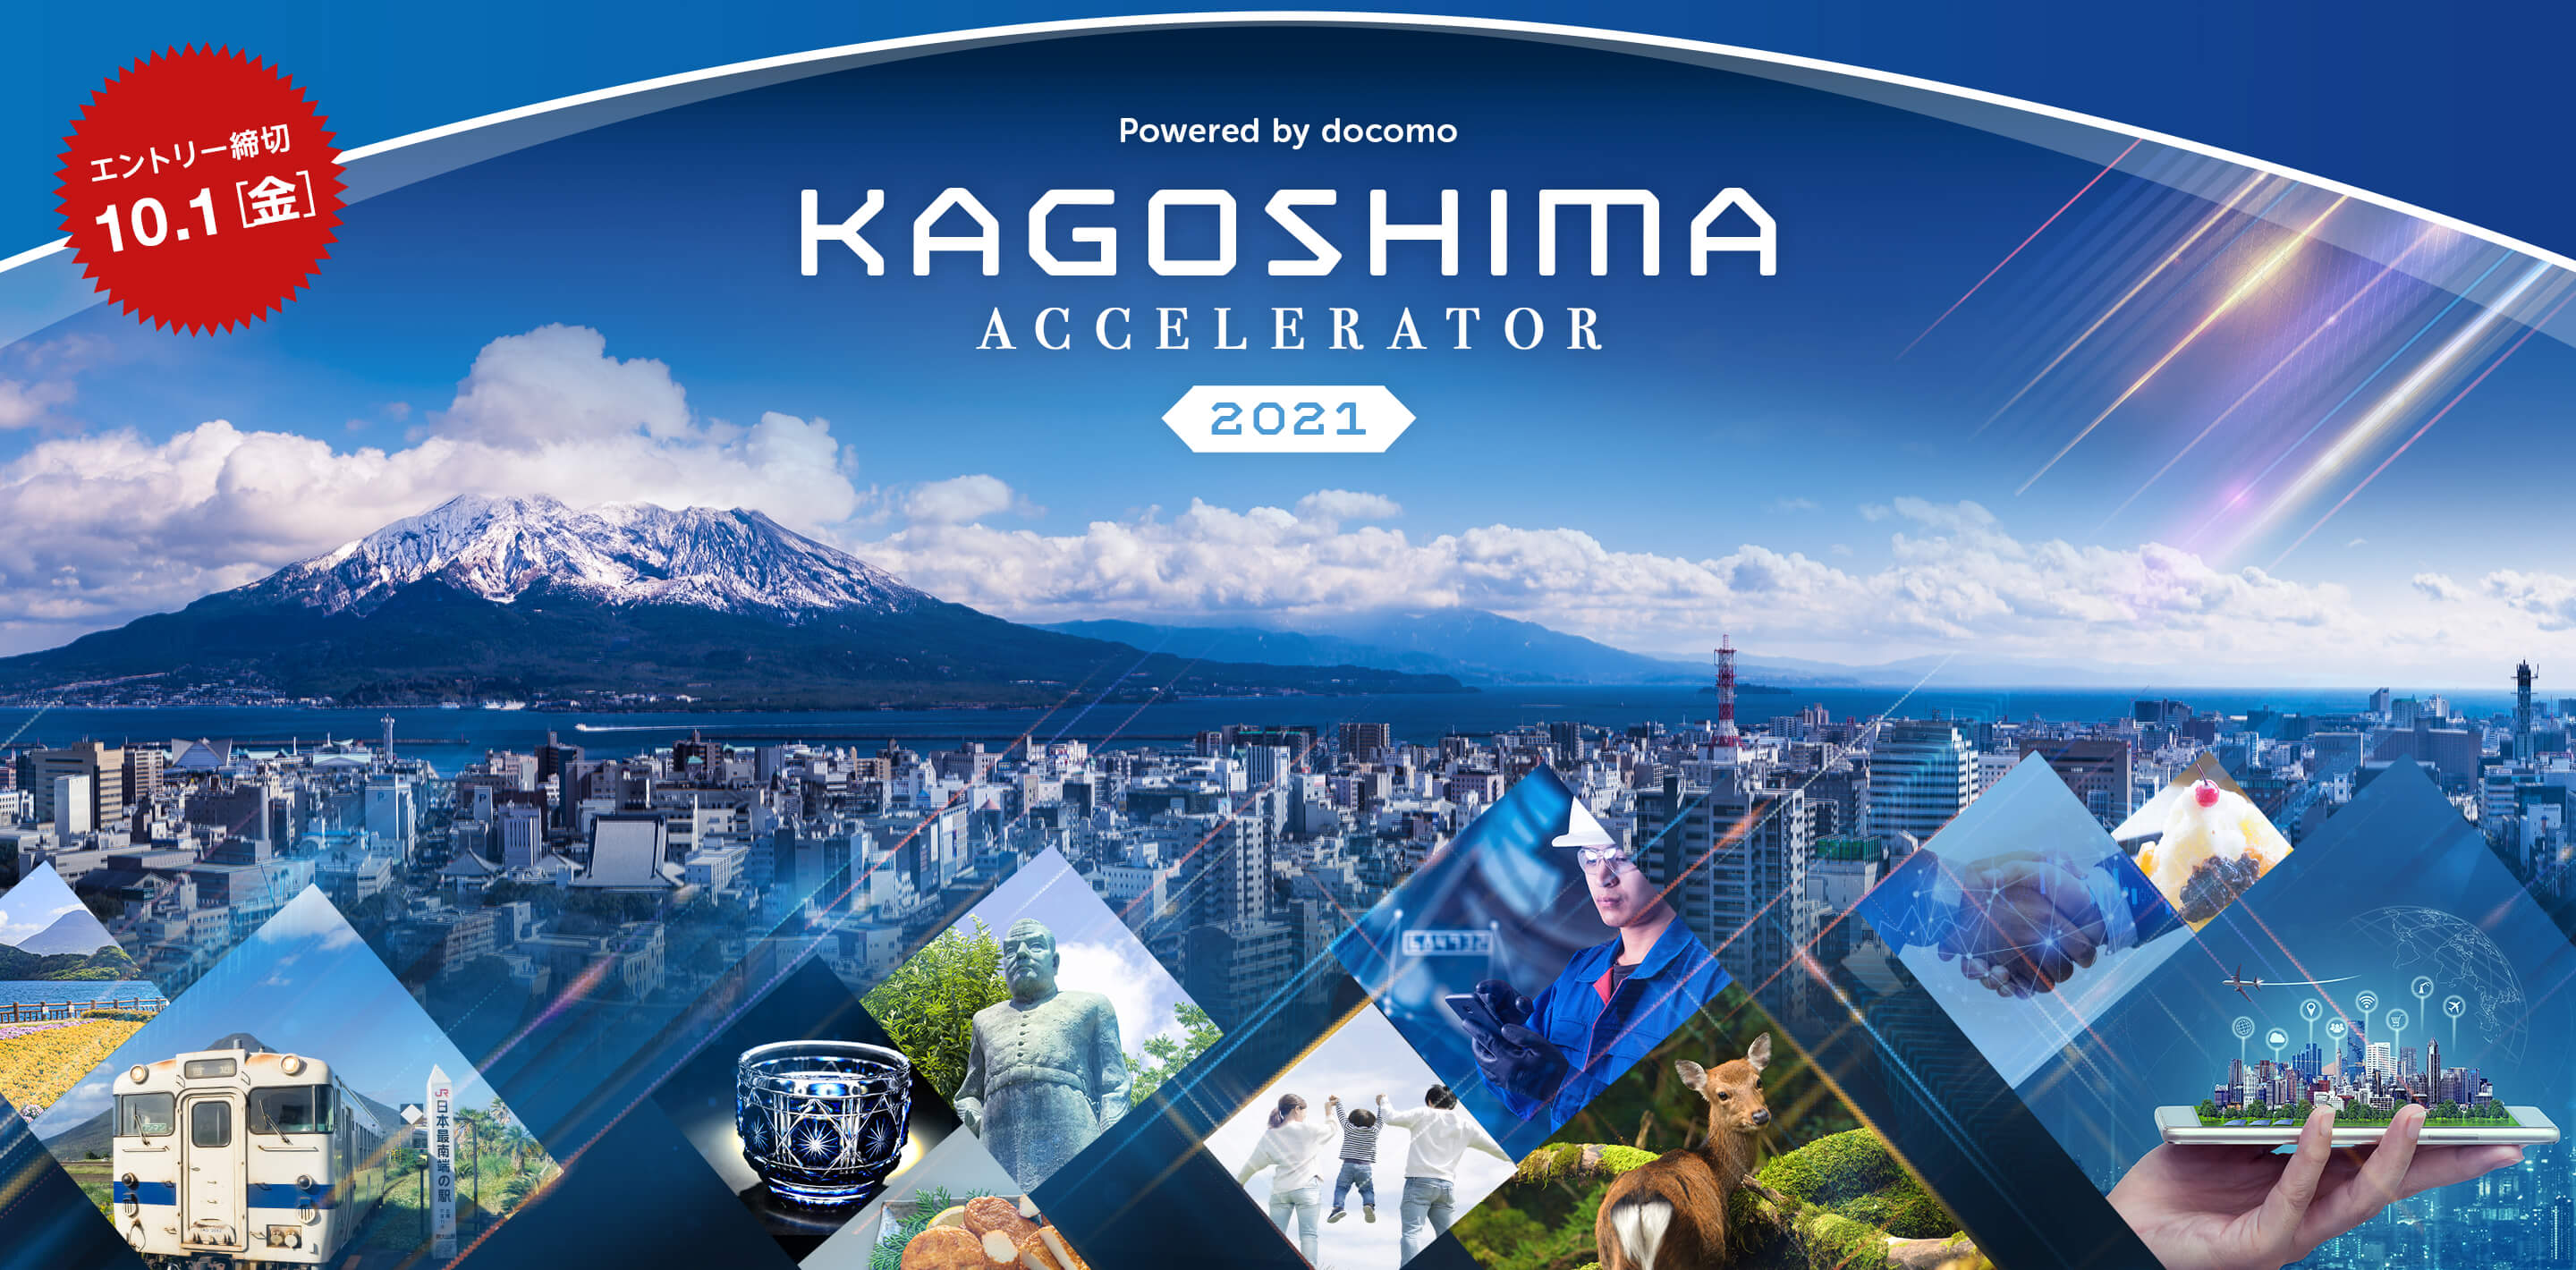 Powered by docomo KAGOSHIMA AGGELERATOR 2021